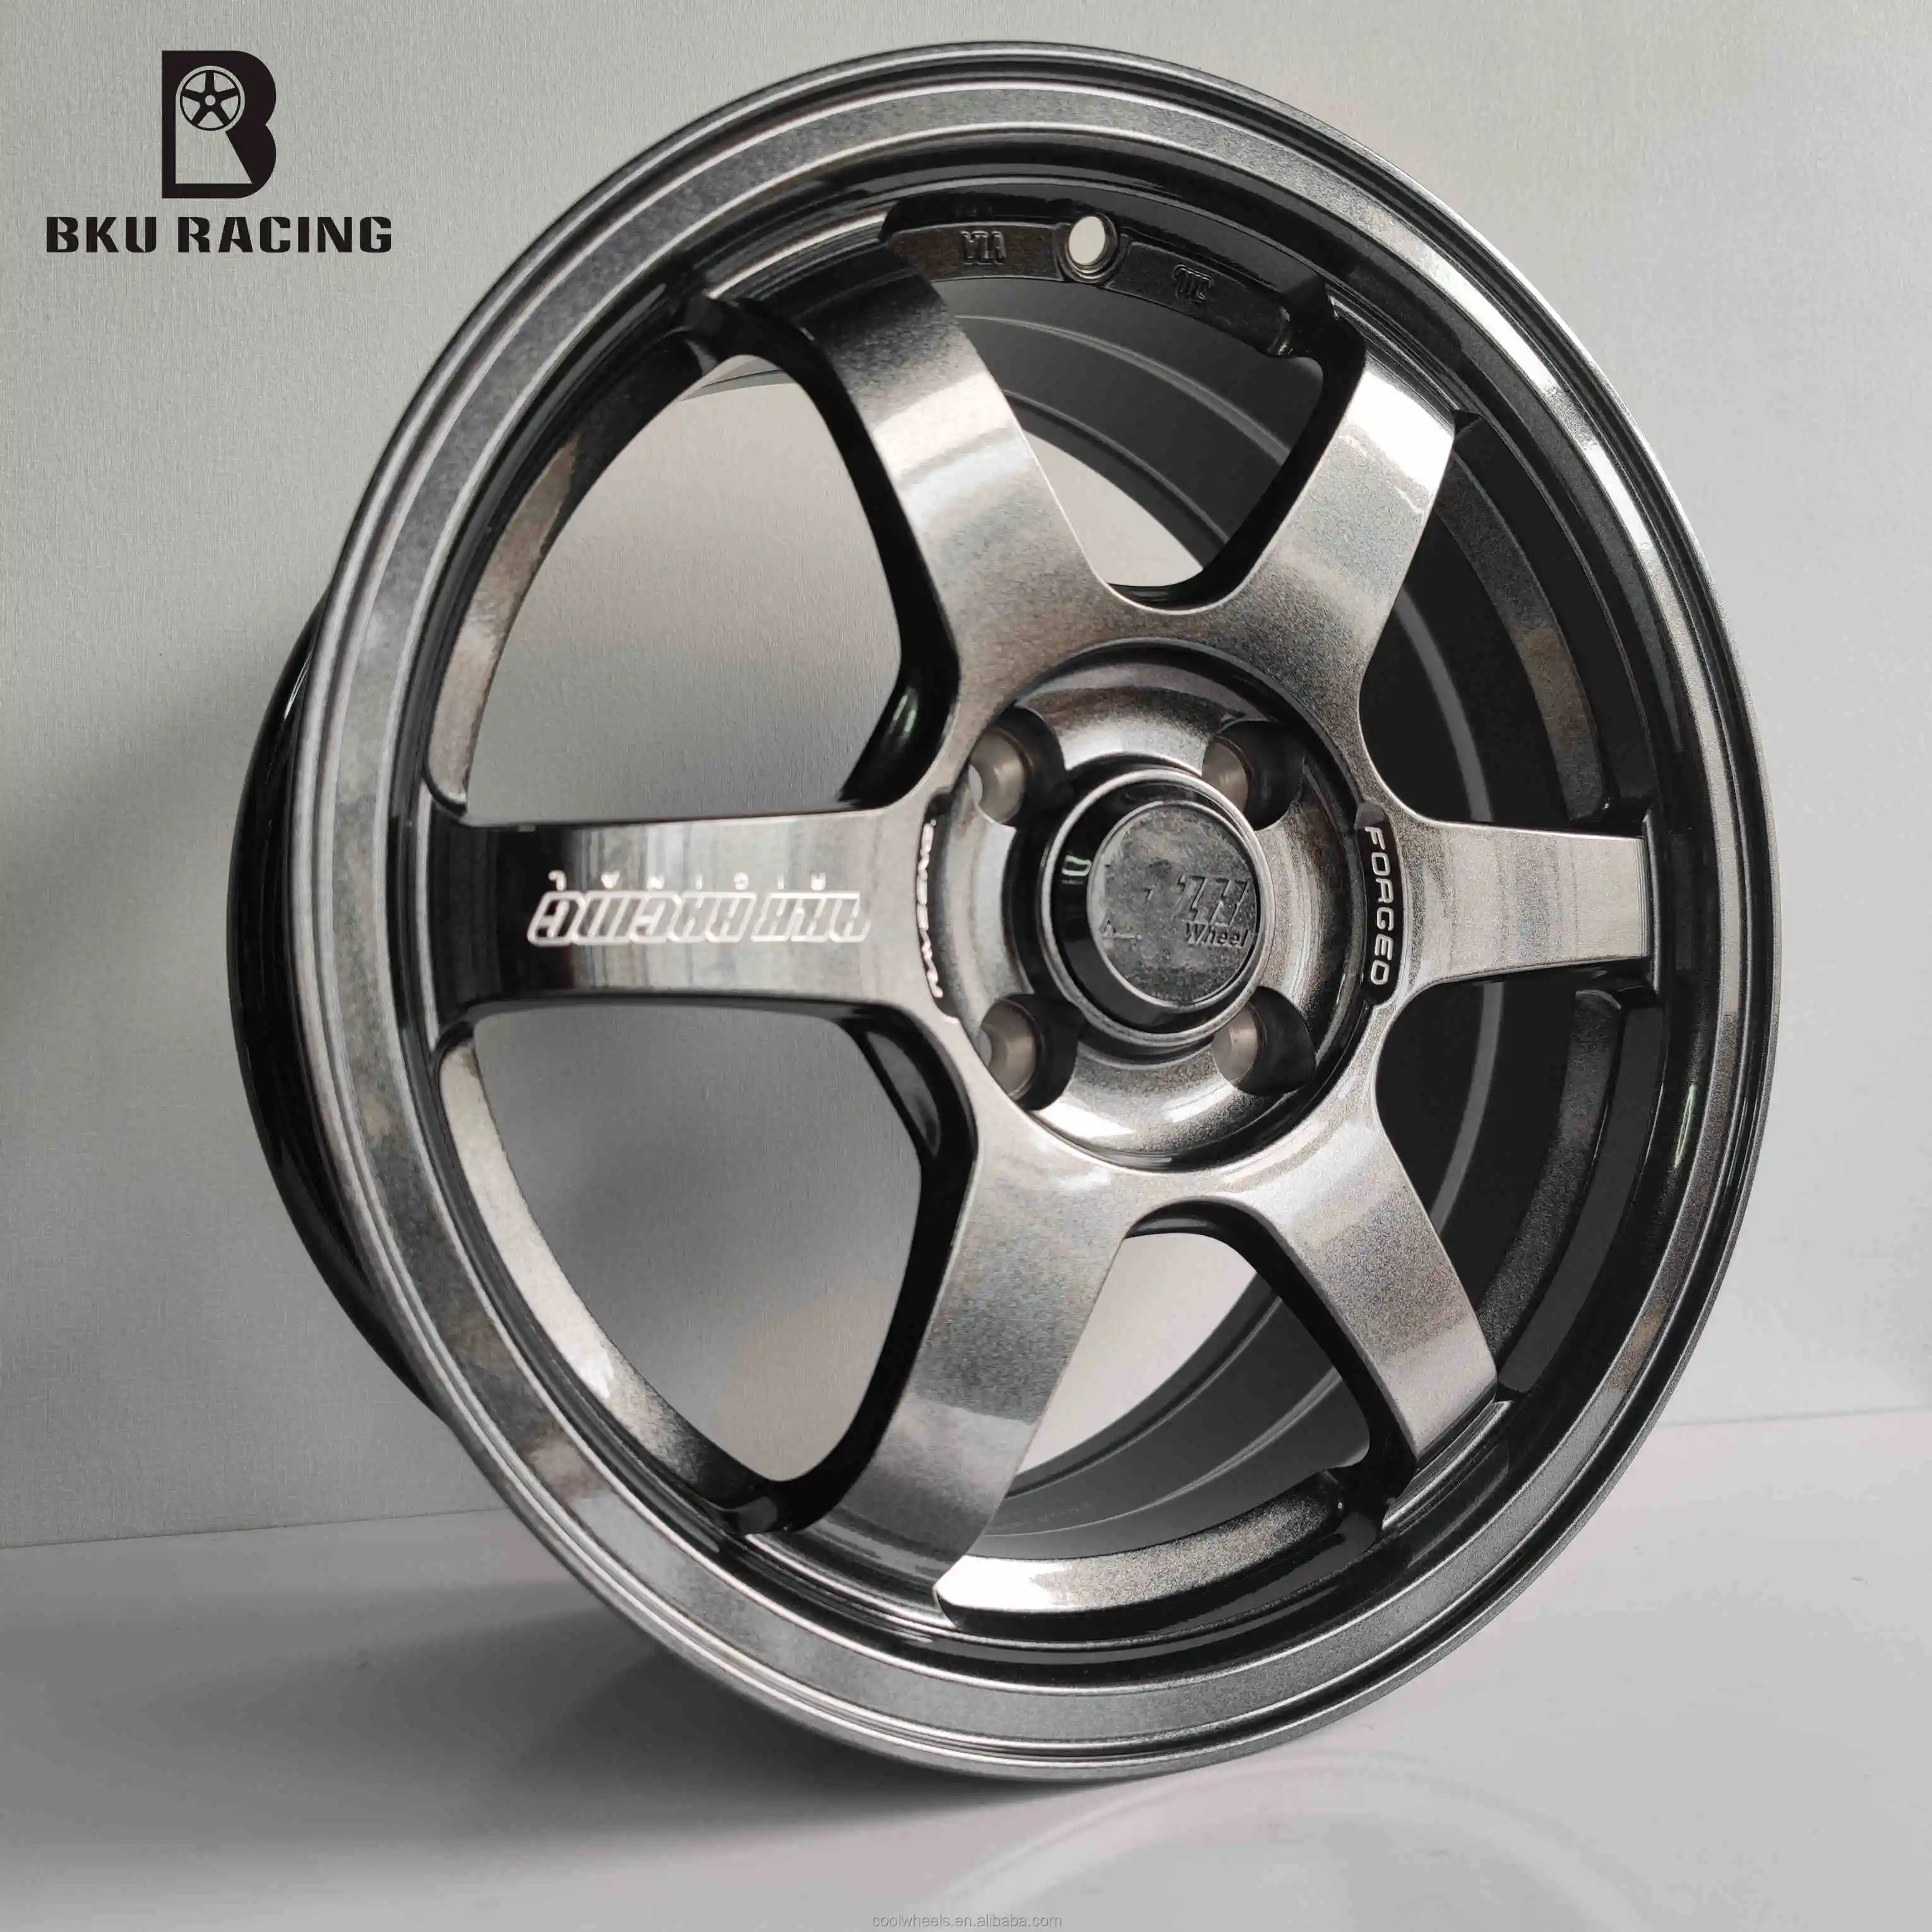 Bku racing passenger car wheels 15 16 17 18 inch 4x100 5x114.3 wheels for volk racing rims TE37 wheels civic jazz GK5 brz gt86 (1600683128842)